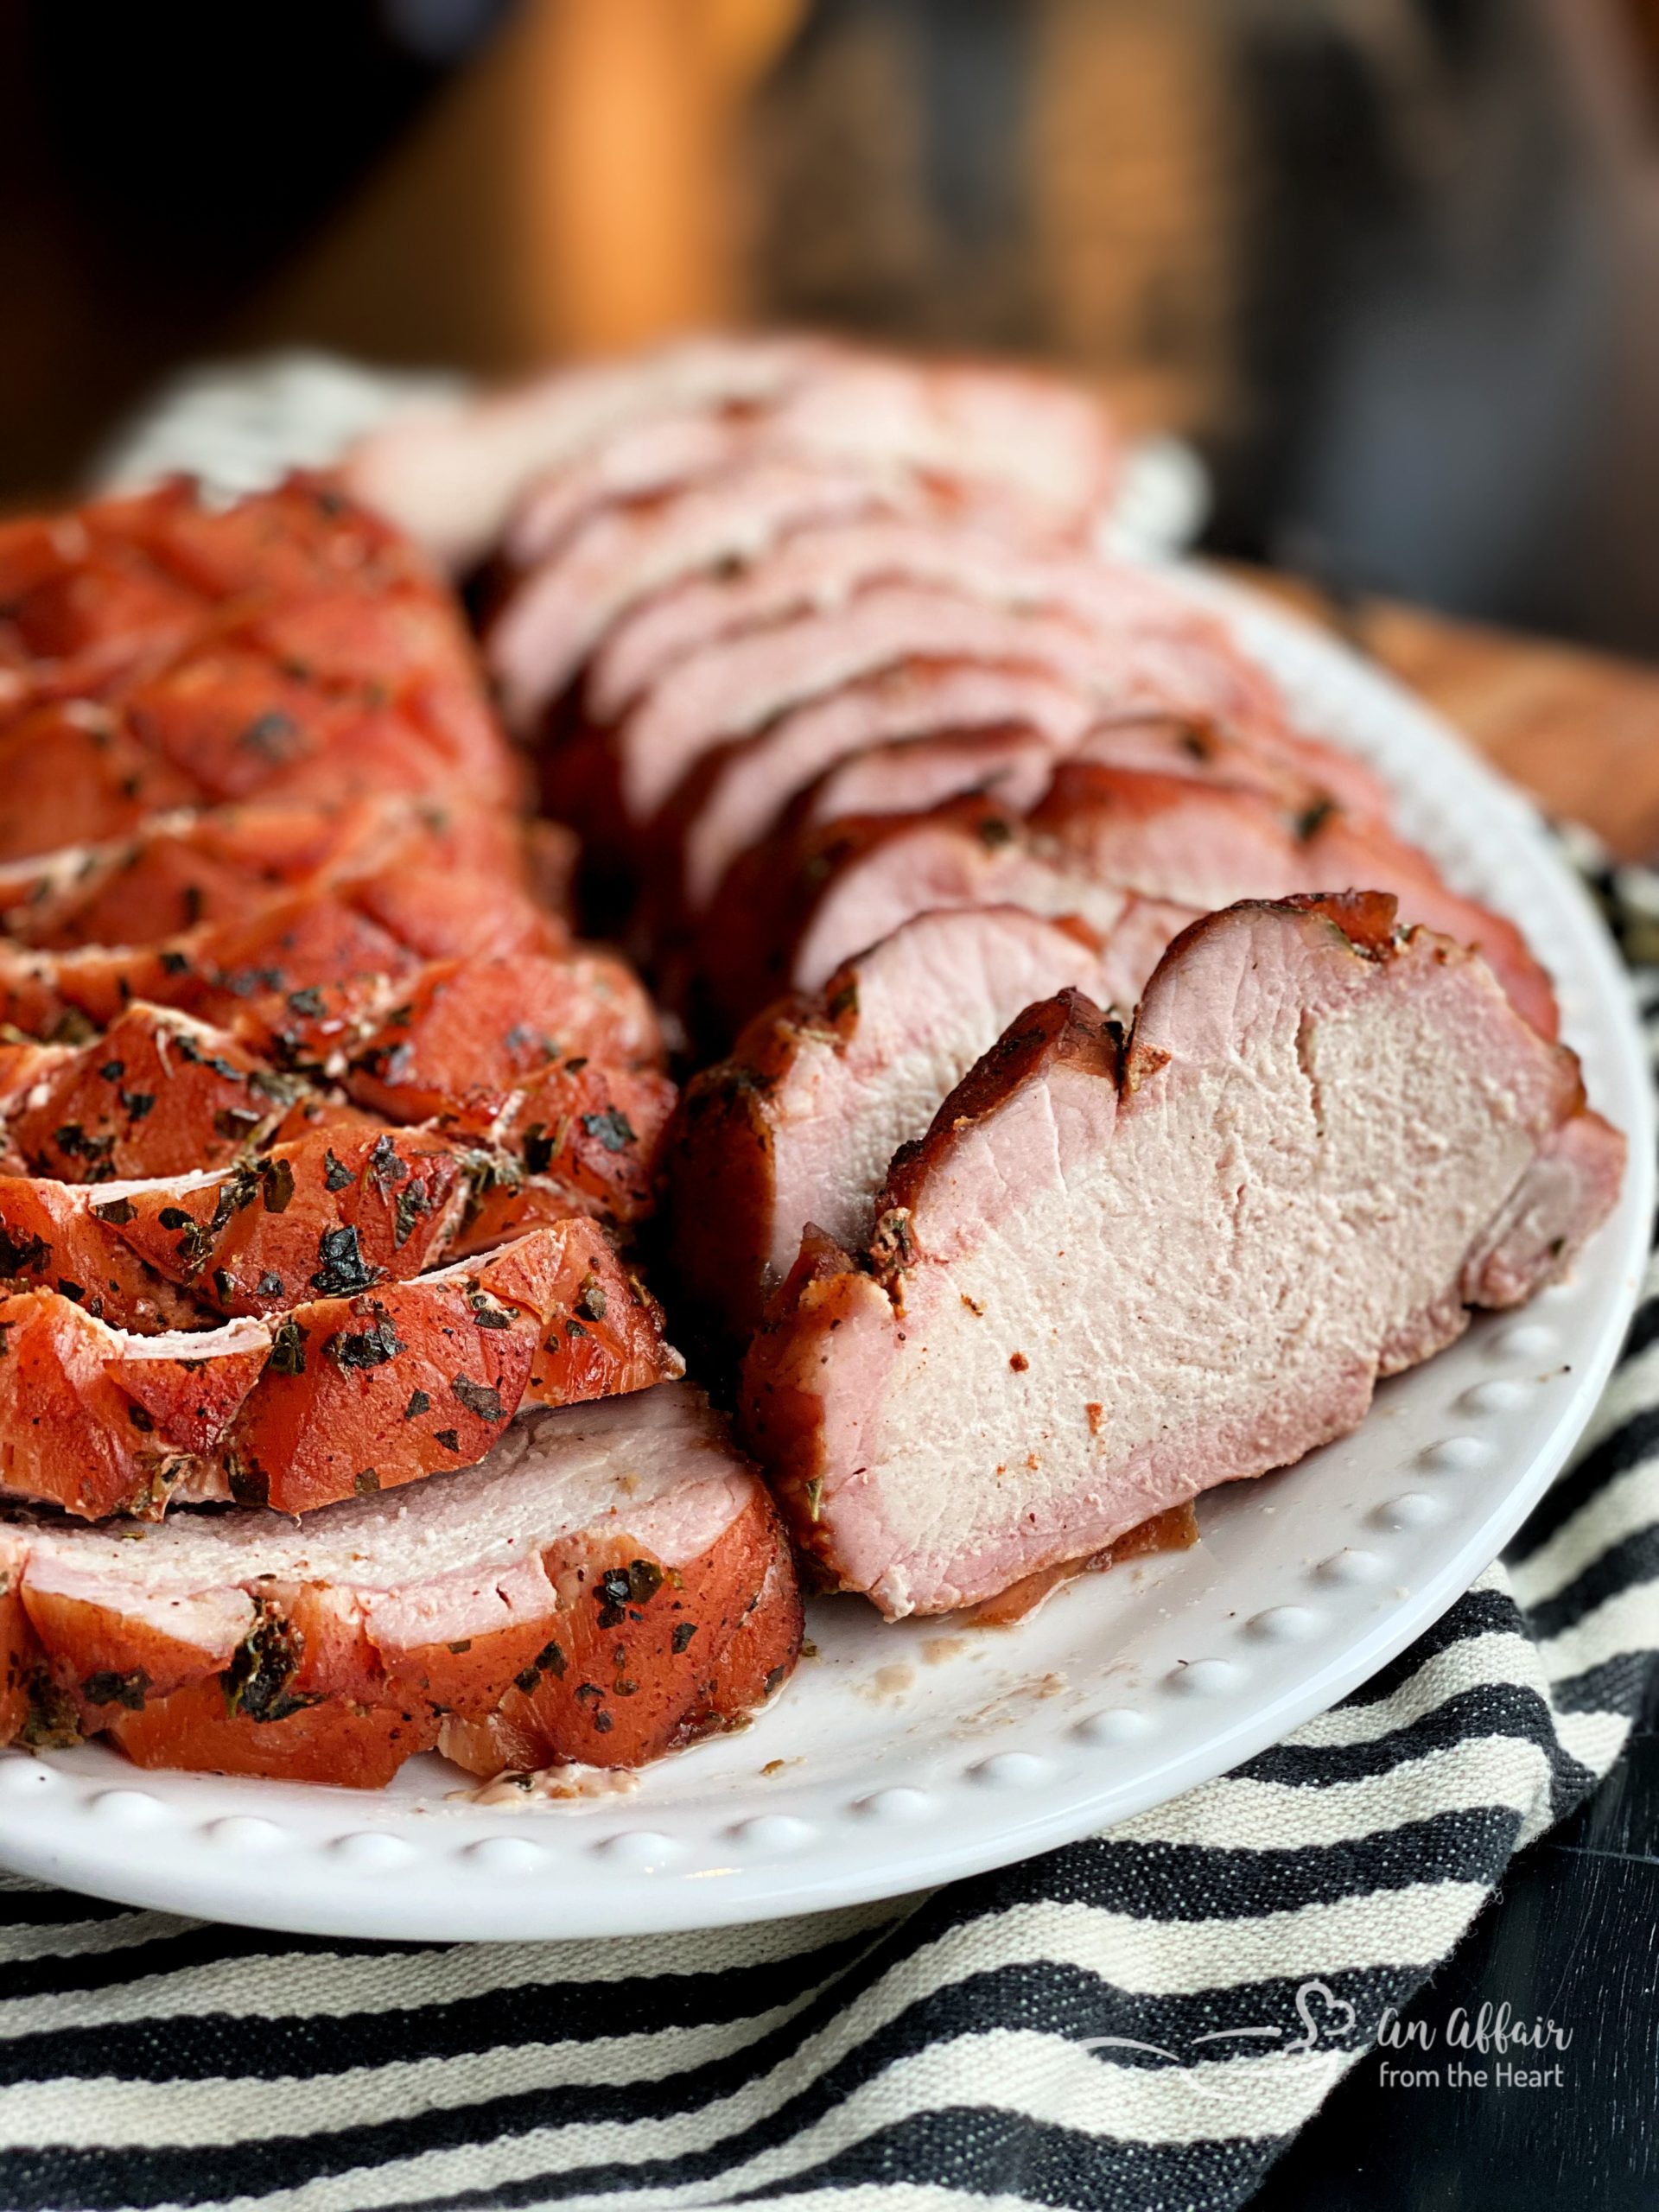 How To Prepare A Perfectly Smoked Pork Loin An Easy Recipe,Kabocha Squash Calories